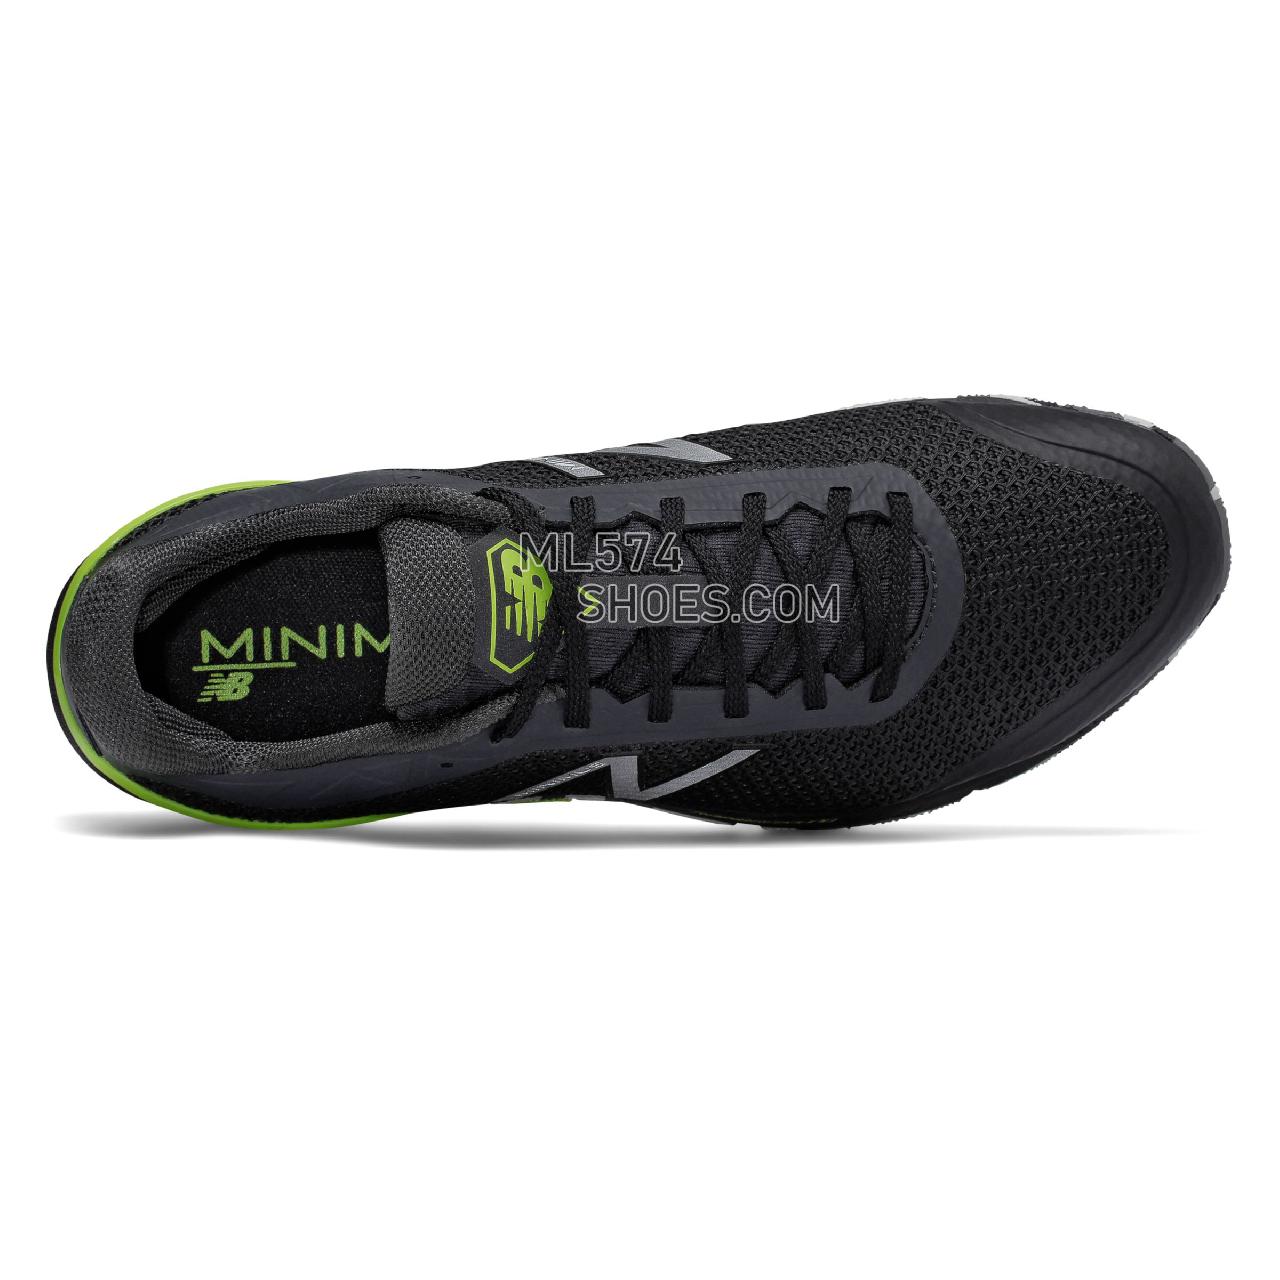 New Balance Minimus 40 Trainer - Men's 40 - X-training Black with Hi-Lite and White - MX40OD1